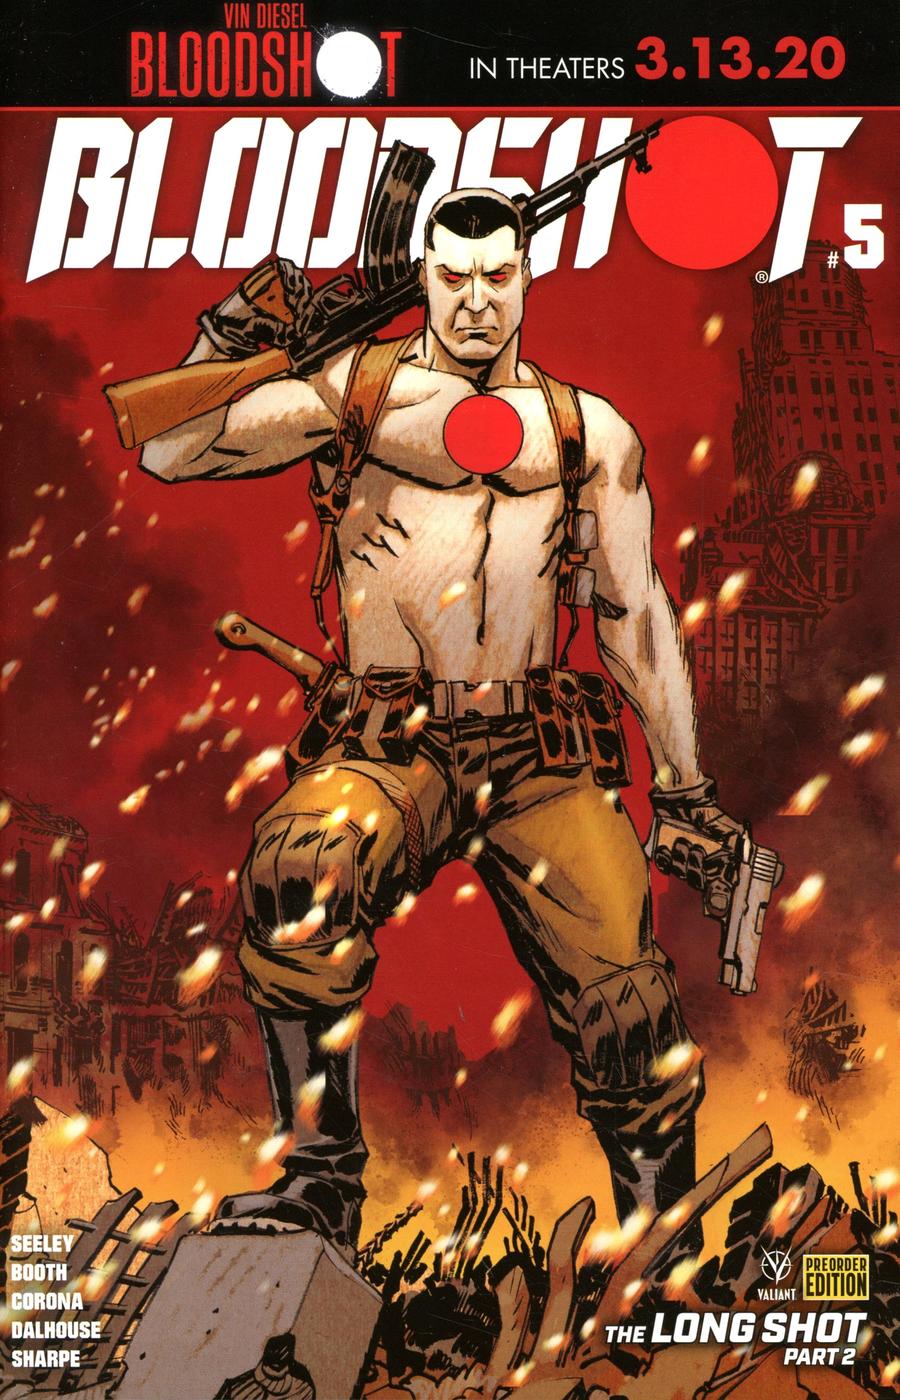 Bloodshot Vol 4 #5 Cover D Variant Pre-Order Edition